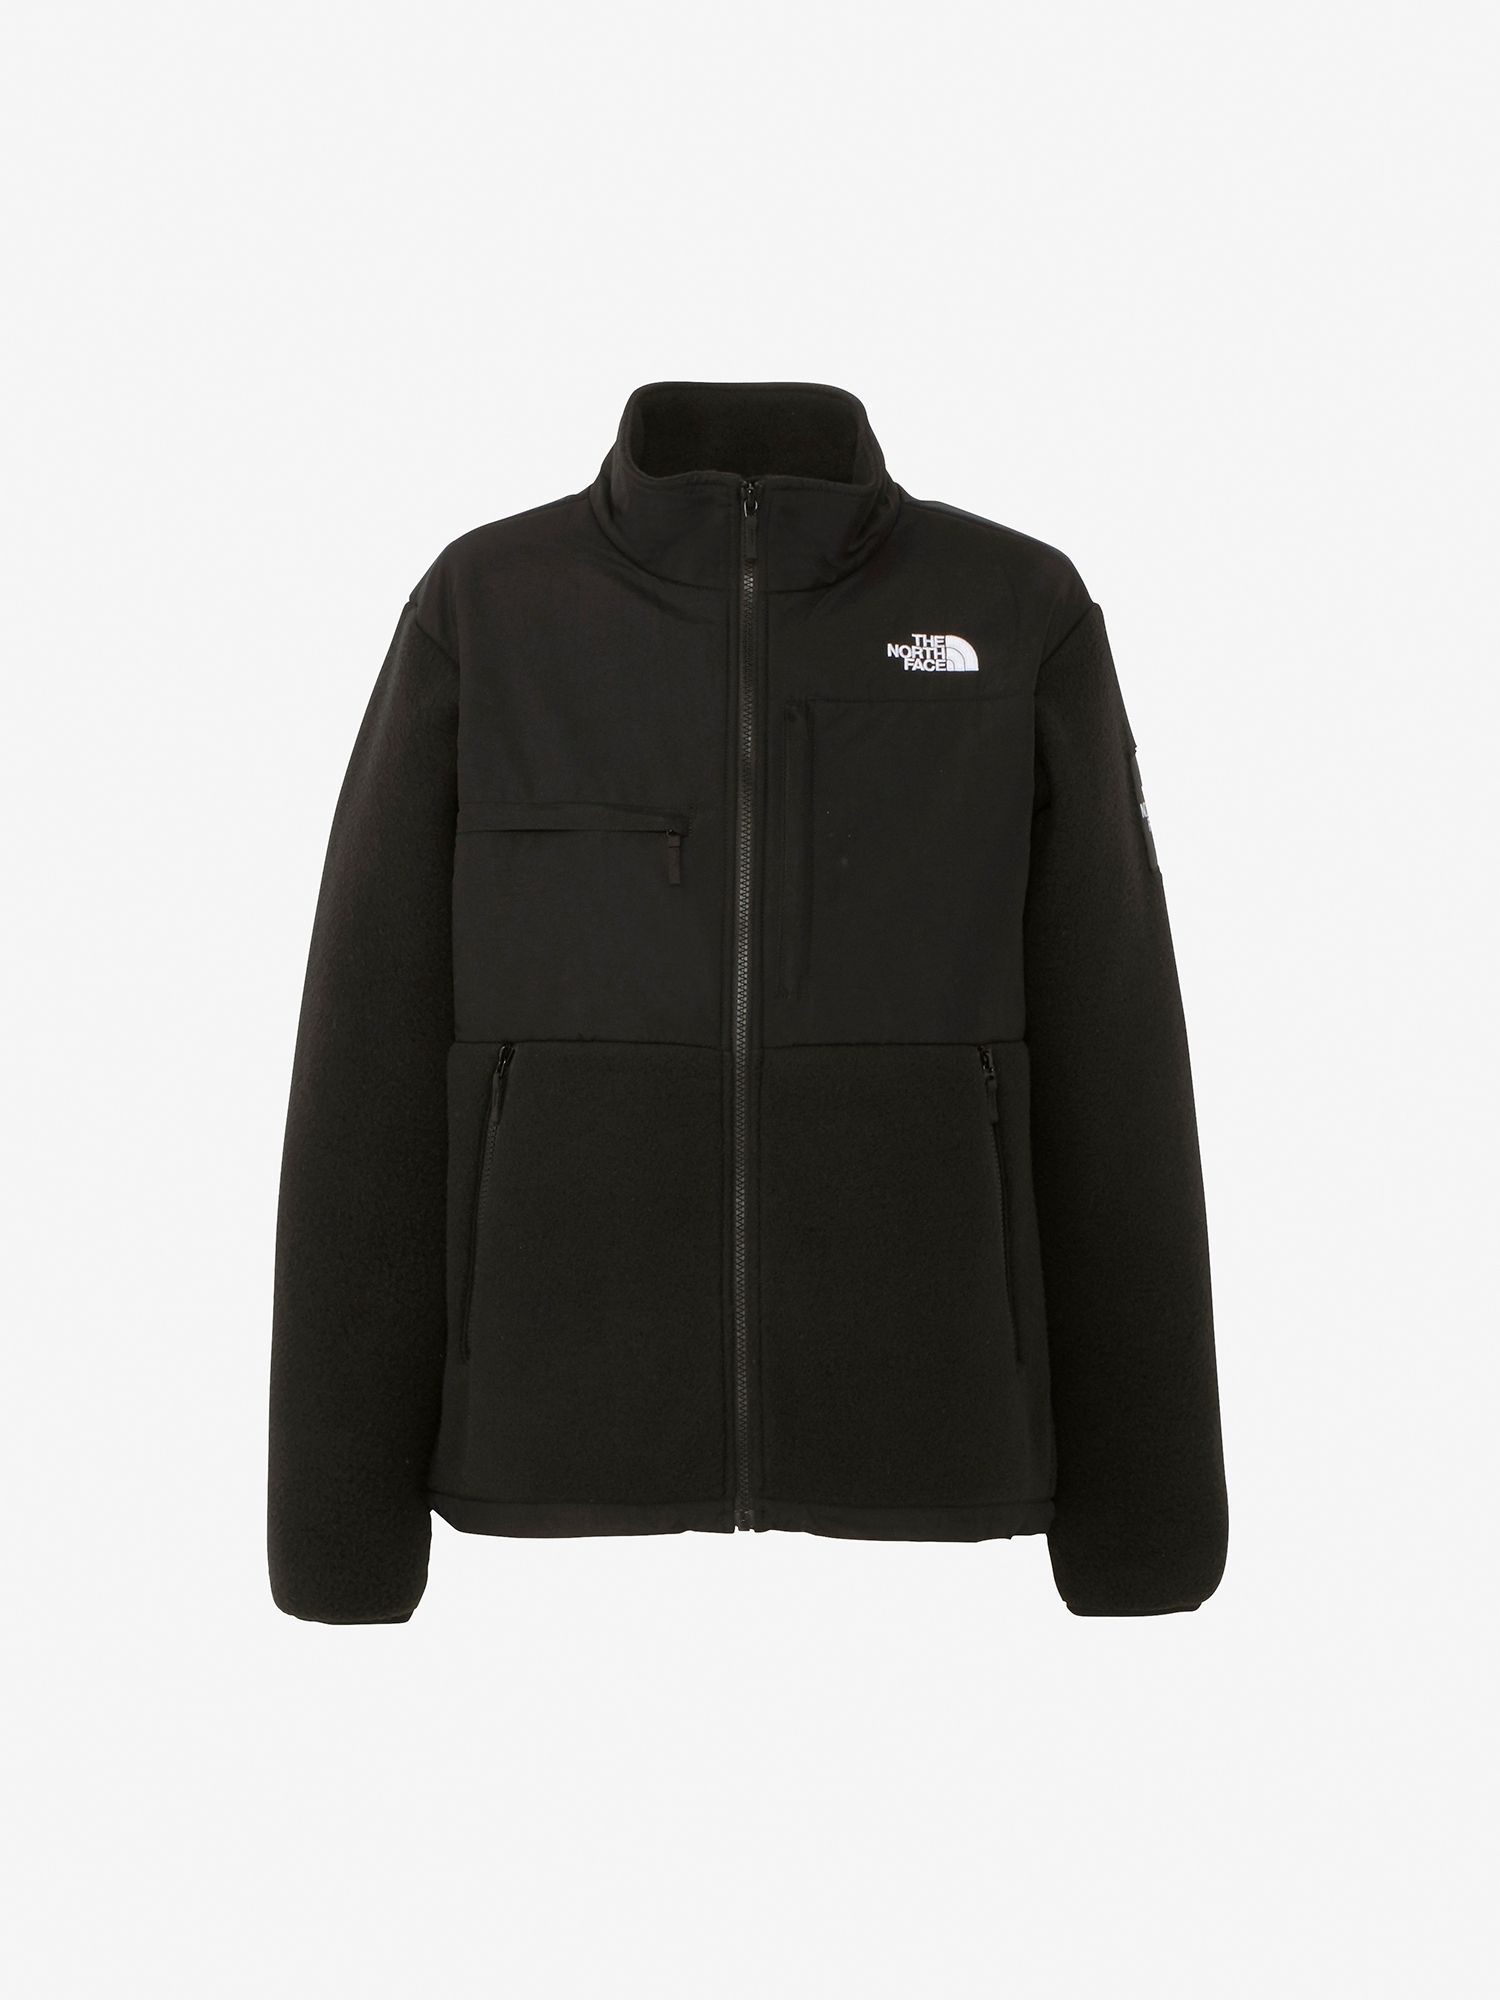 The North Face denali jacket | tradexautomotive.com